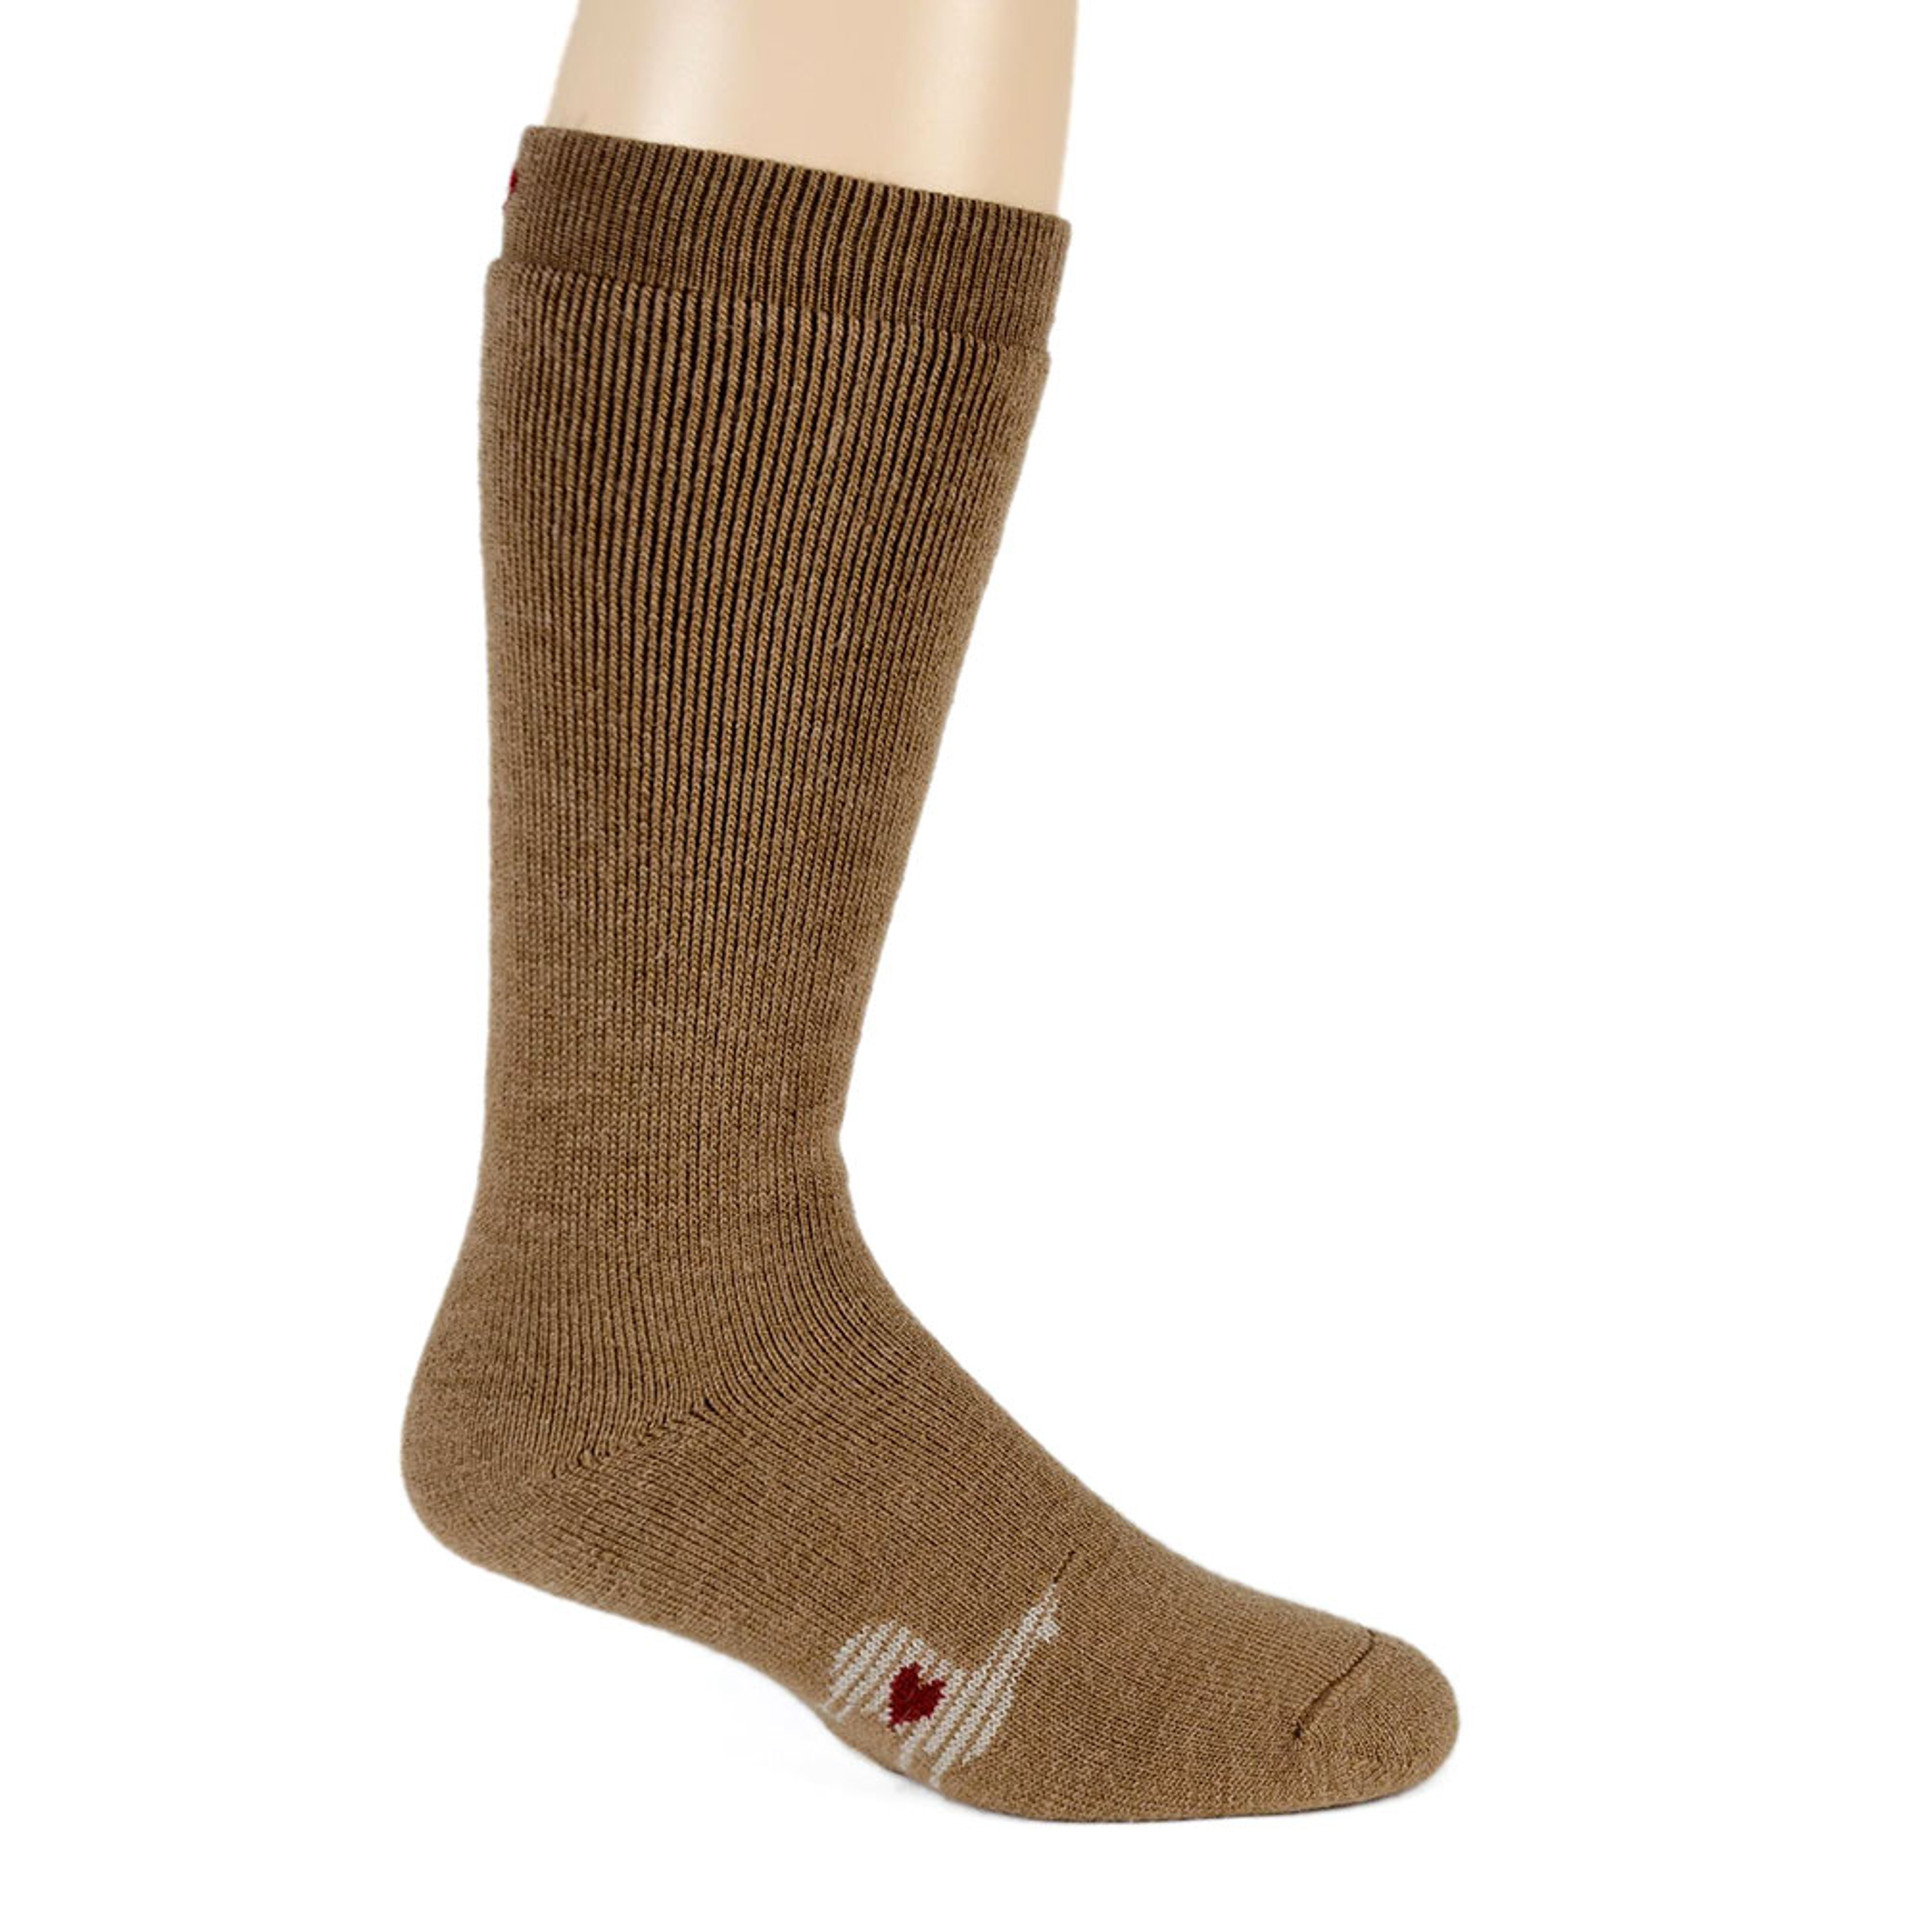 Best Alpaca Socks for Men and Women - Norlander Sock Company